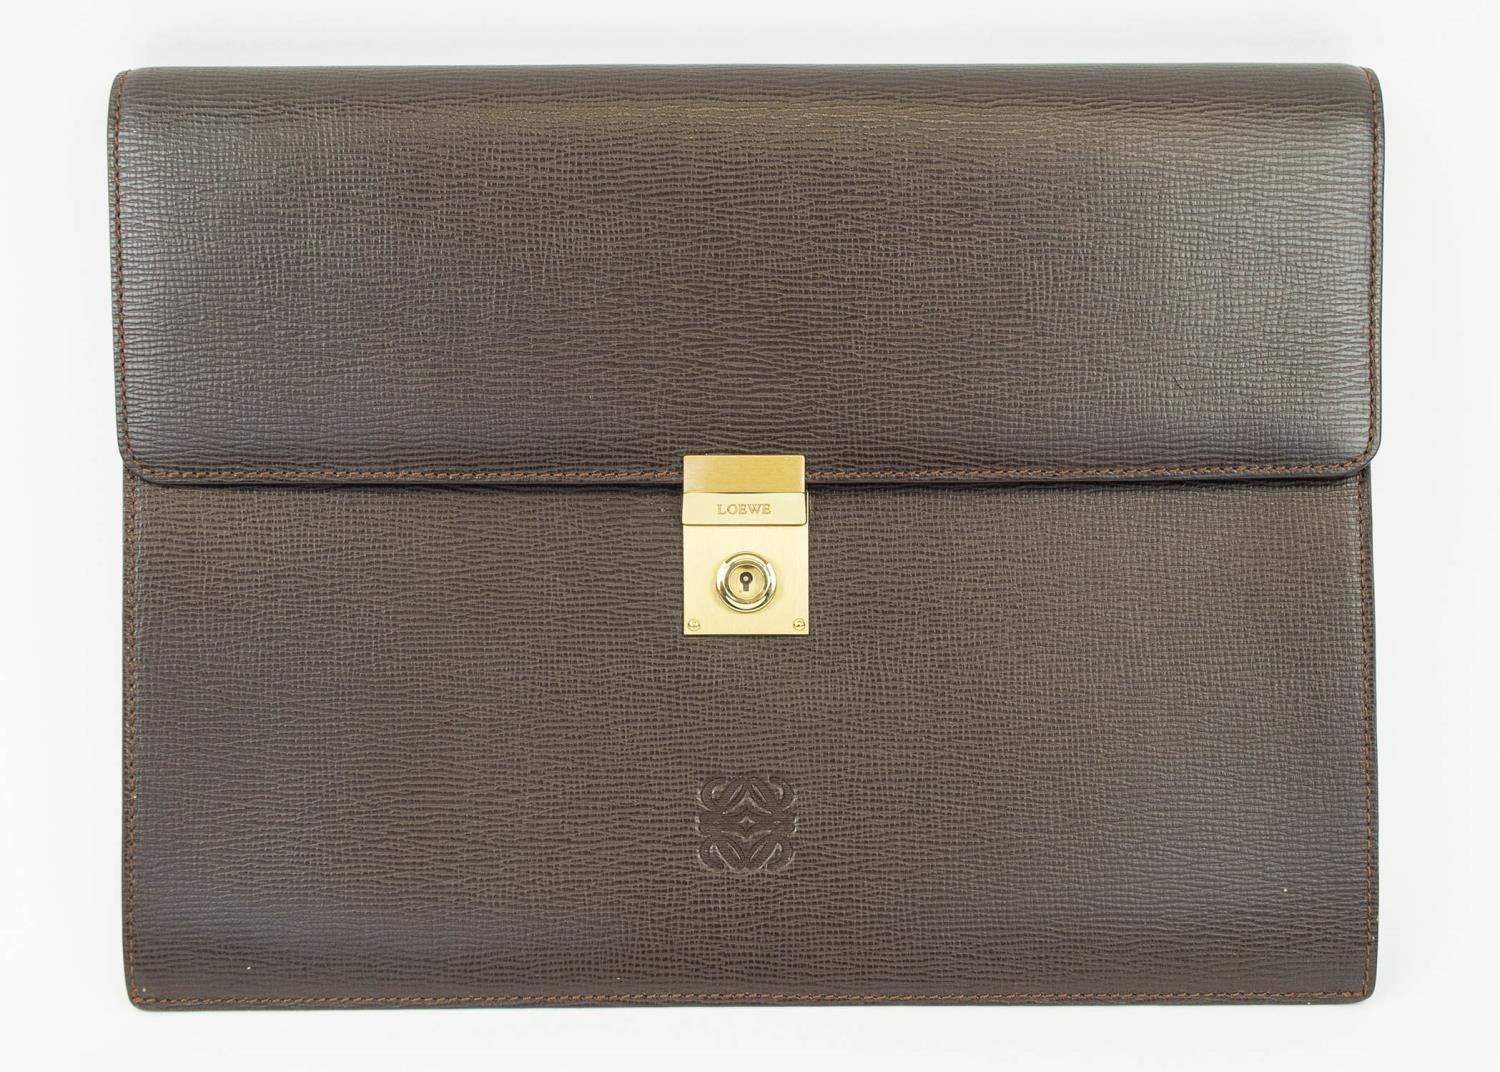 LOEWE FOLIO, luxury brown Spanish leather, 36cm x 28cm.